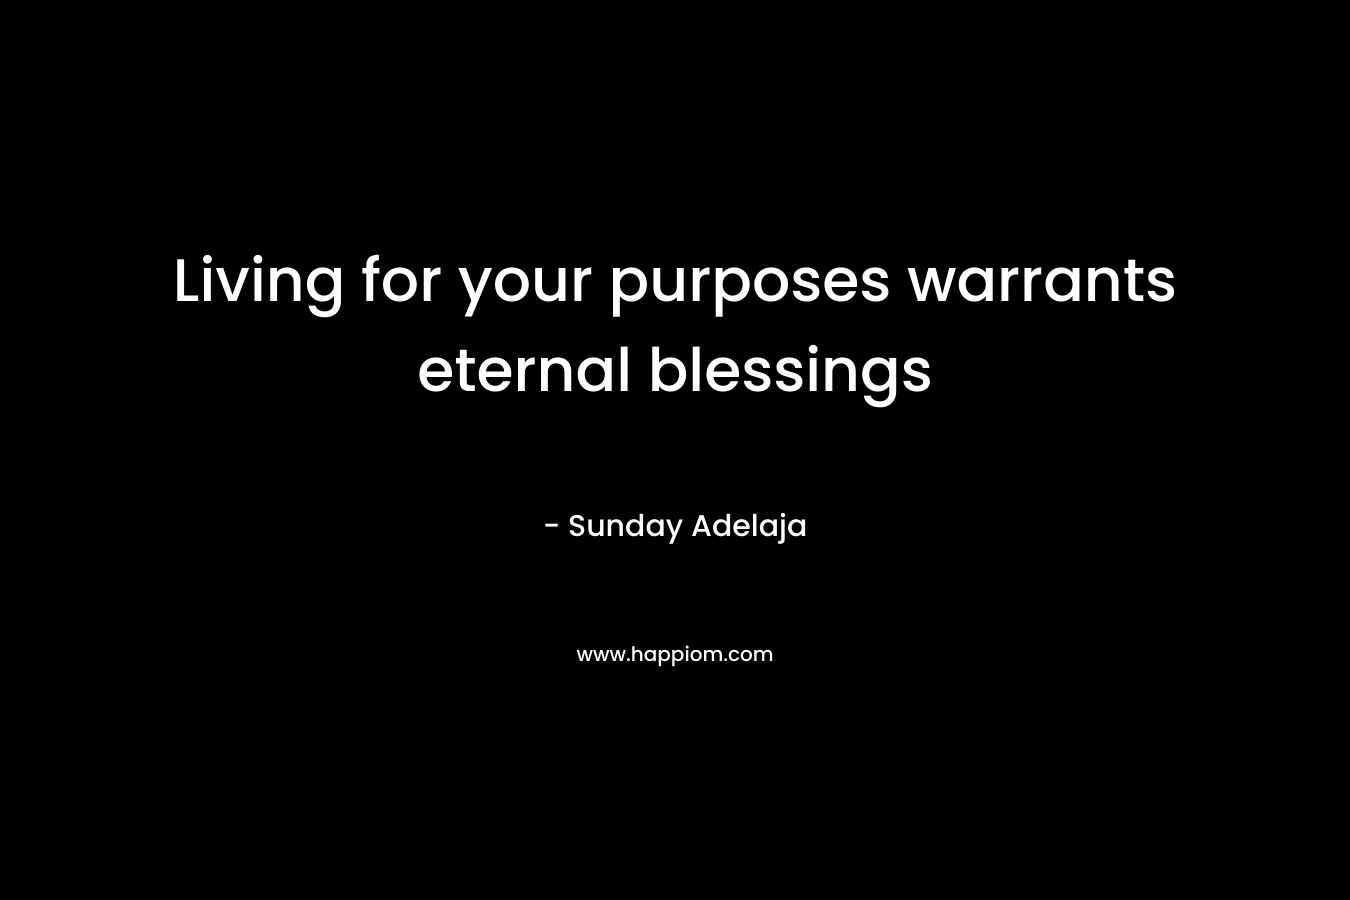 Living for your purposes warrants eternal blessings